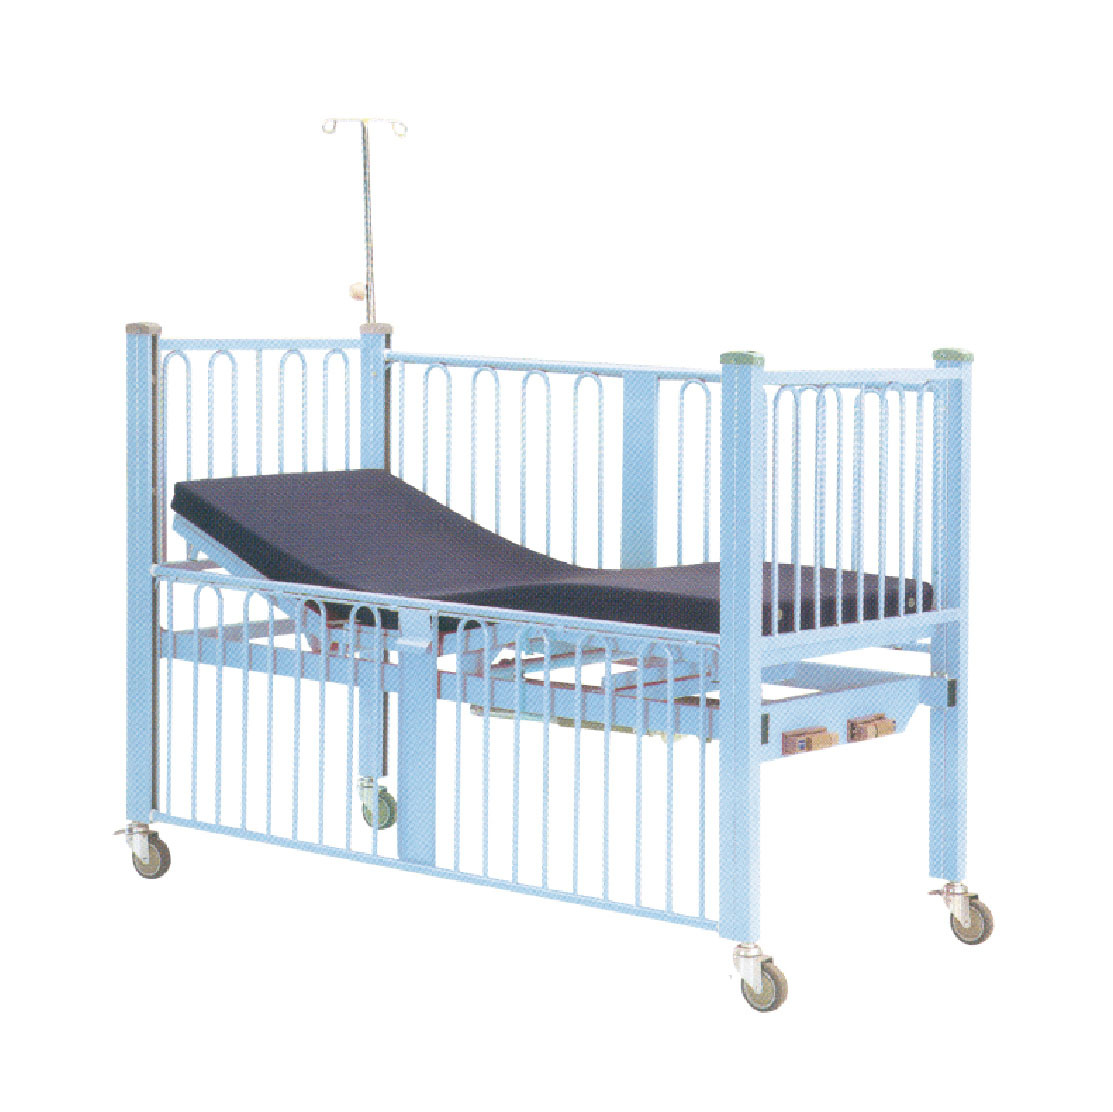 HL-A141B Paediatric bed